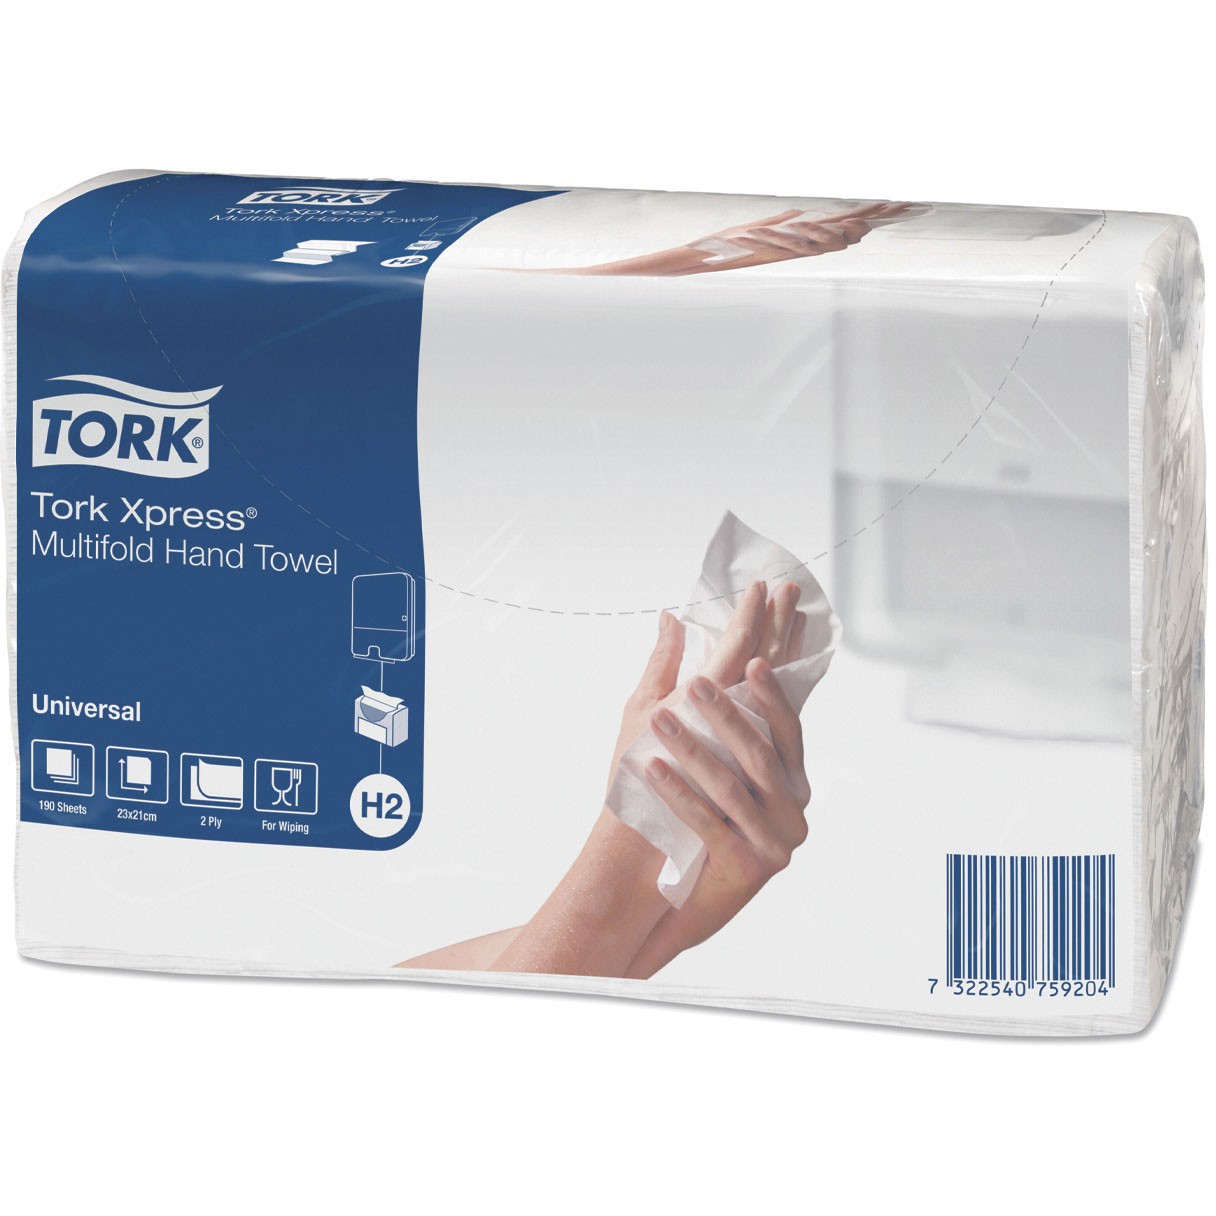 Håndklædeark Tork multifold H2 3 fold, Xpress (20x190)